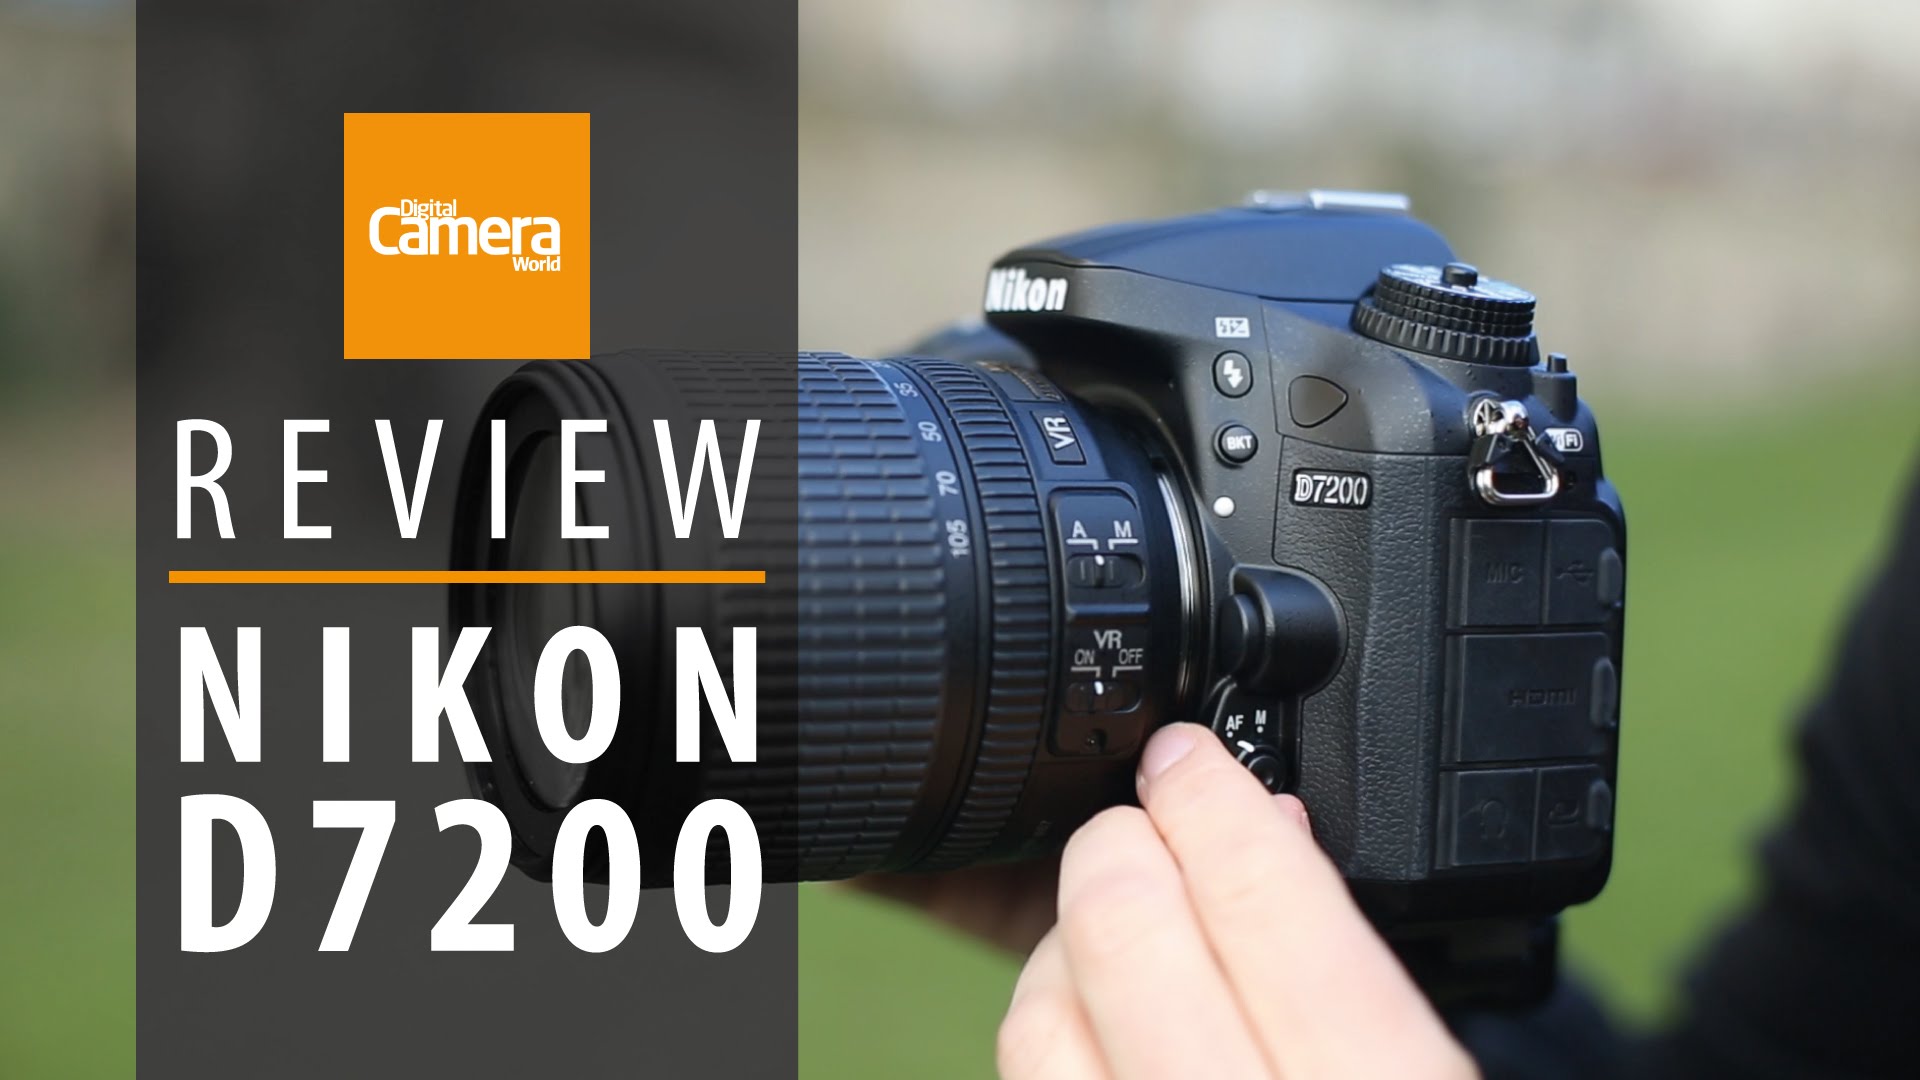 Nikon D7200 review (Handling | Viewfinder/Screen | Wi-Fi | Sensor | Sample Images | Video)